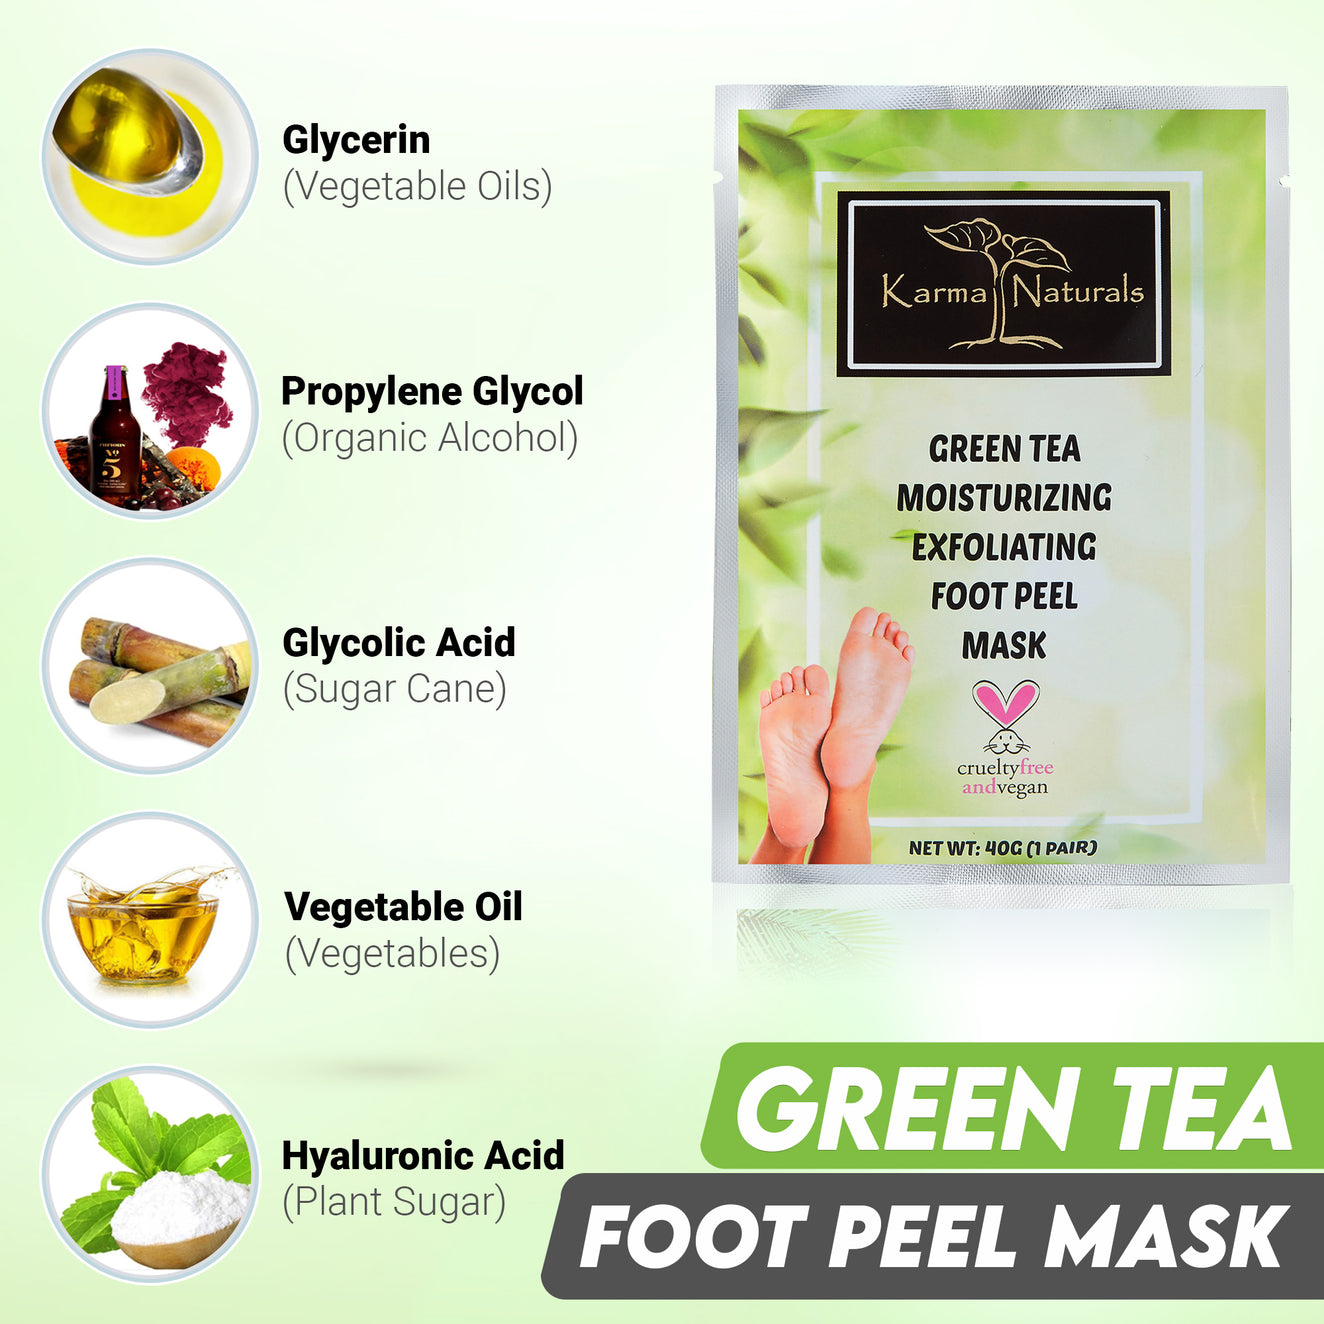 Karma Peach Foot Peel Mask – Helps Remove Callus & Repair Cracked Heels by Karma Organic – For Men & Women [2 Pack]